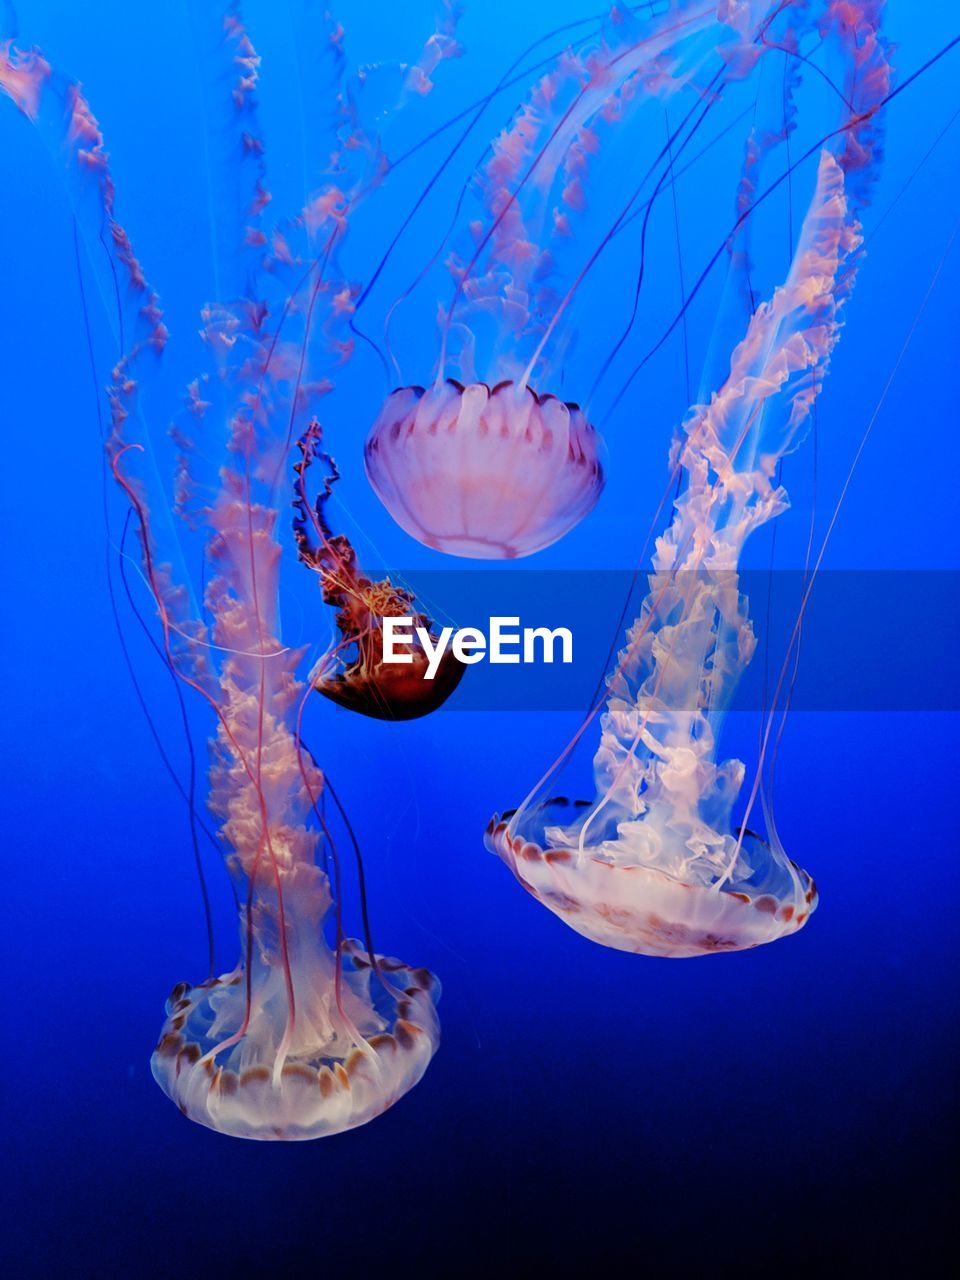 Jellyfish at th monterey bay aquarium